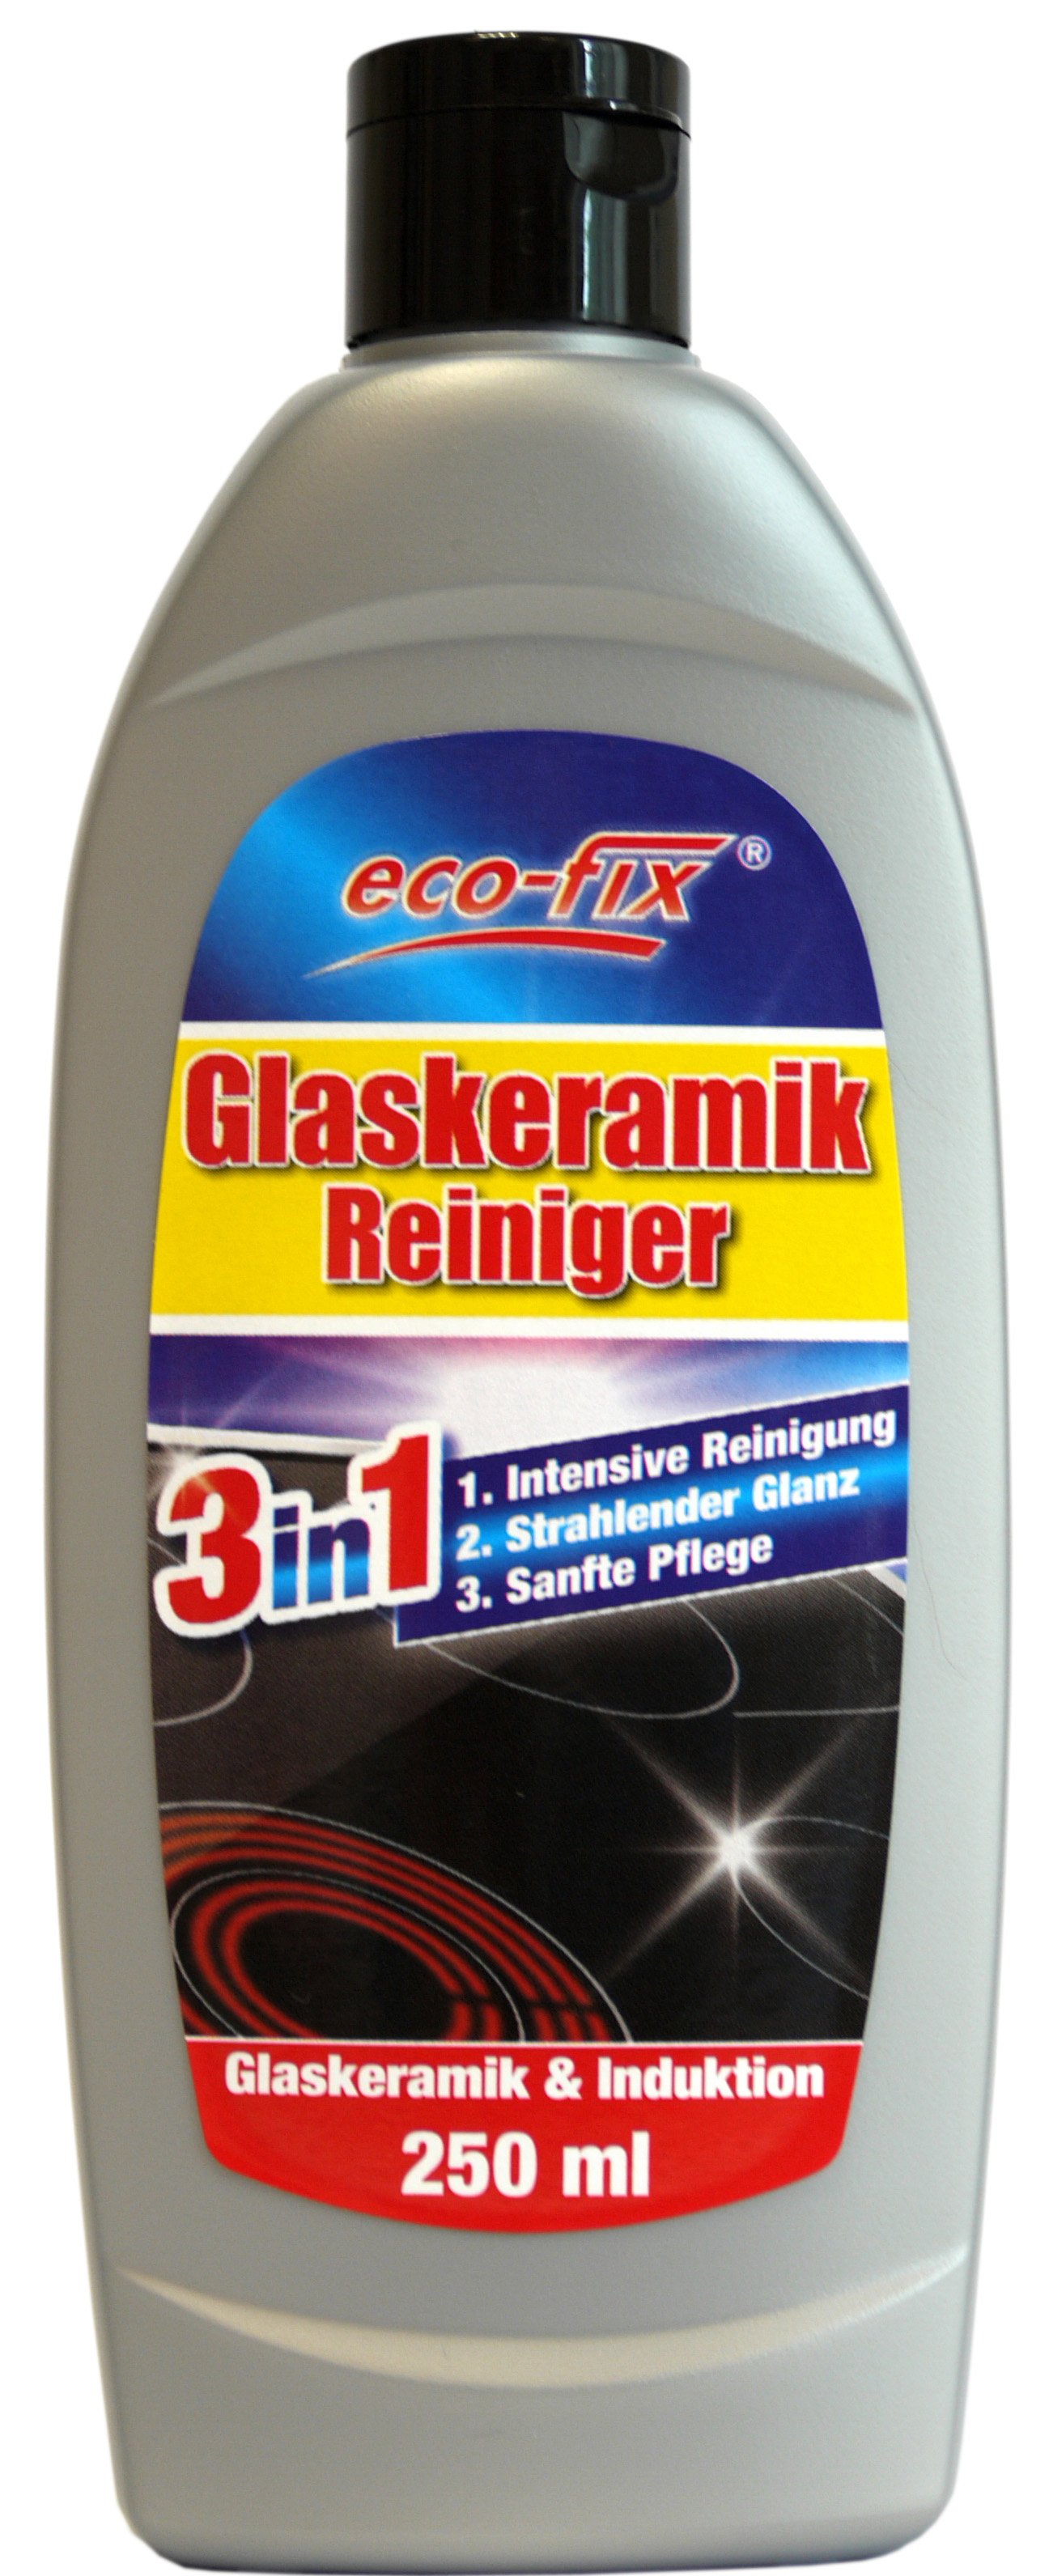 02465 - eco-fix Glaskeramik Reiniger 250 ml